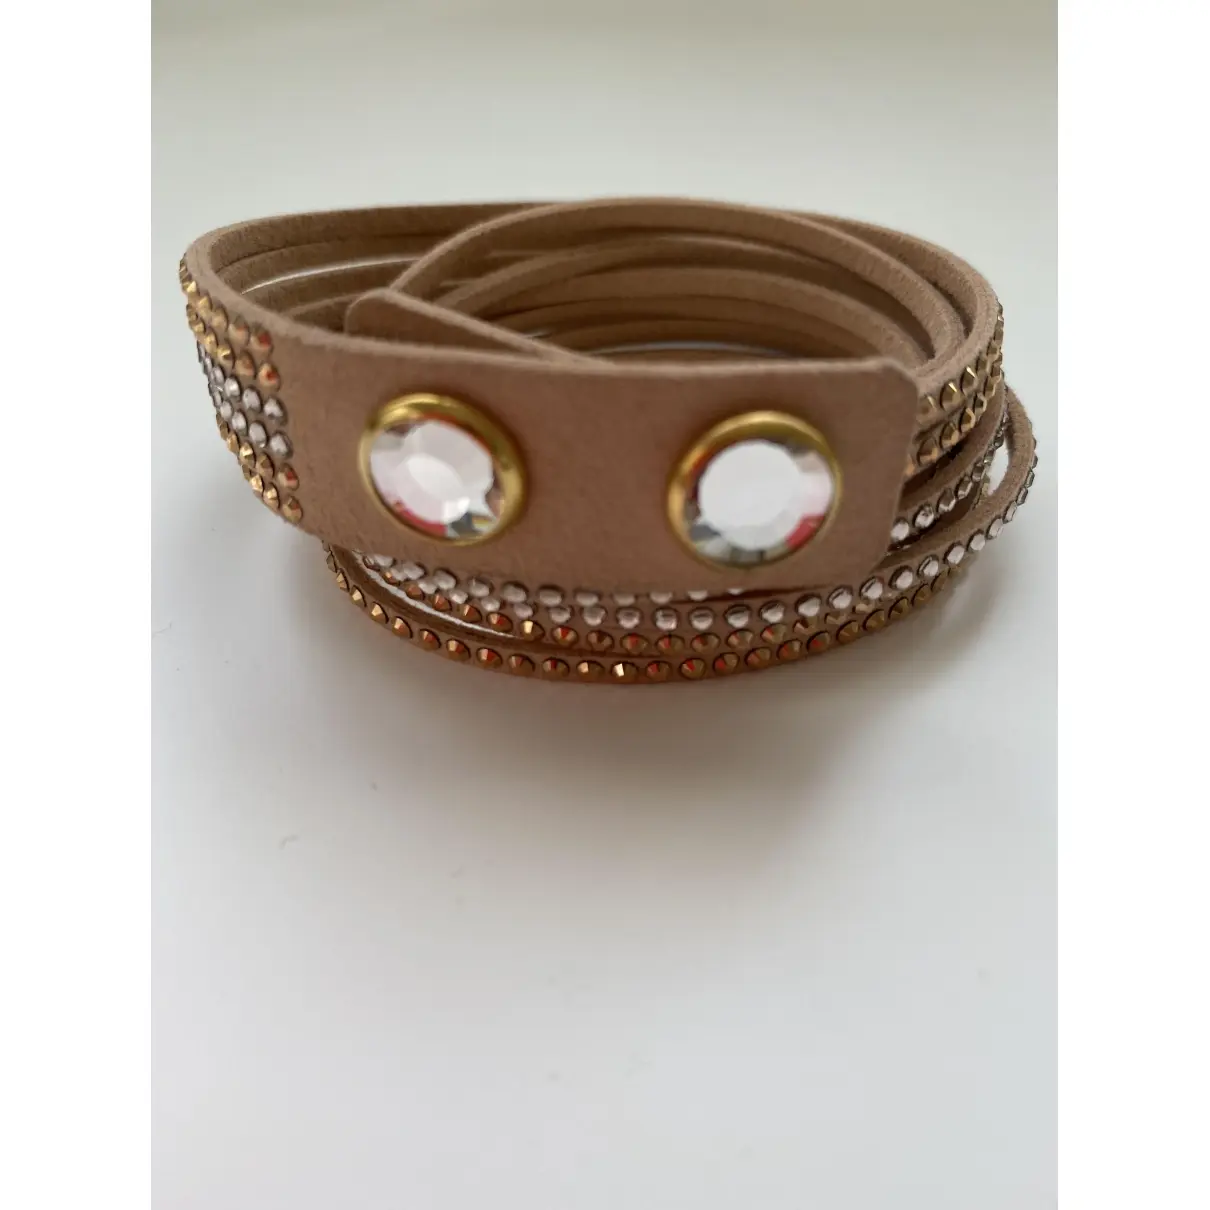 Buy Swarovski Slake leather bracelet online